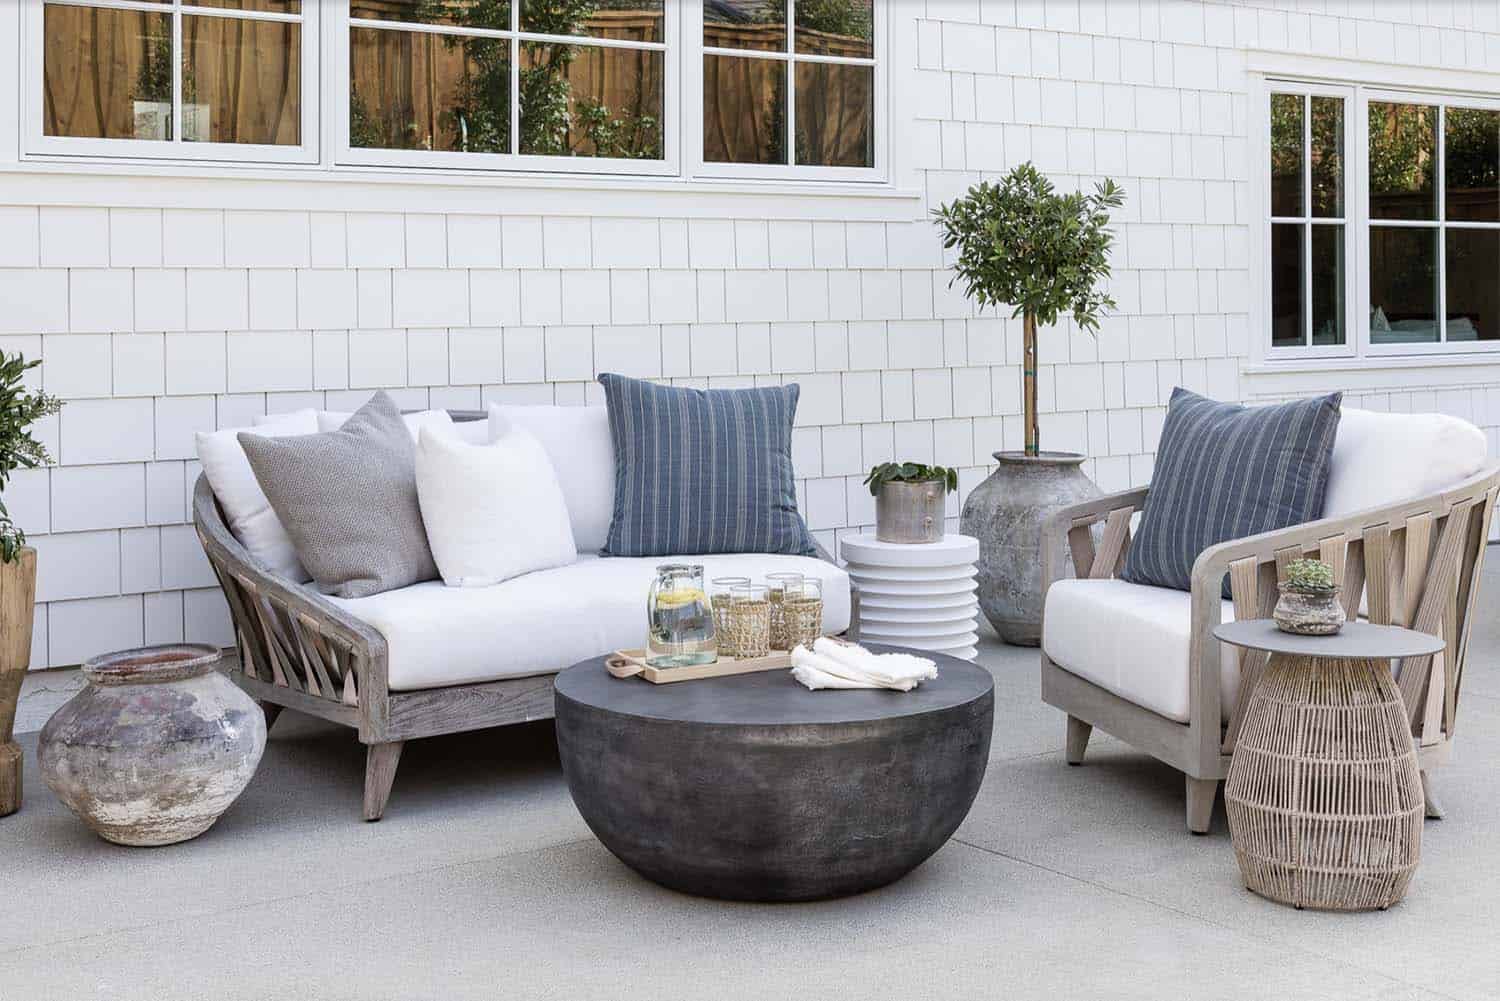 coastal style backyard patio with outdoor furniture